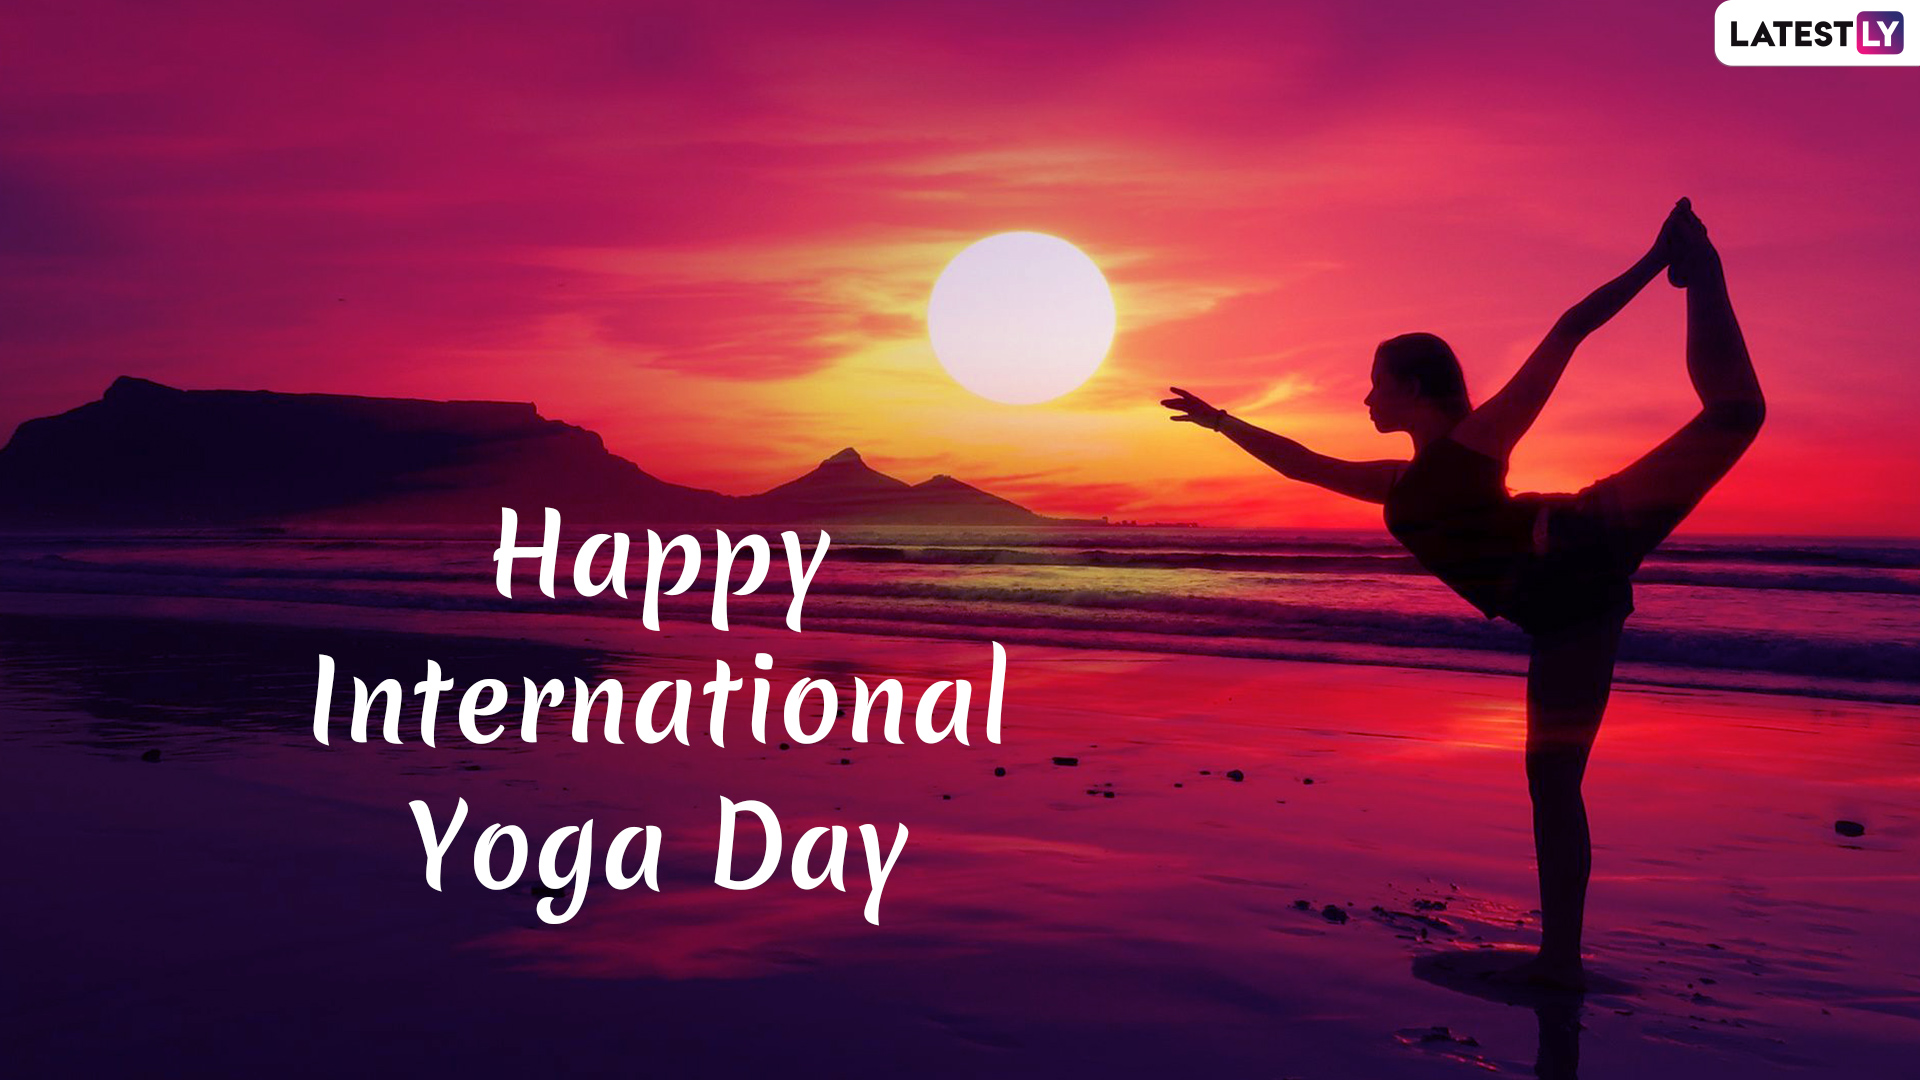 Happy International Yoga Day Wishes Images 